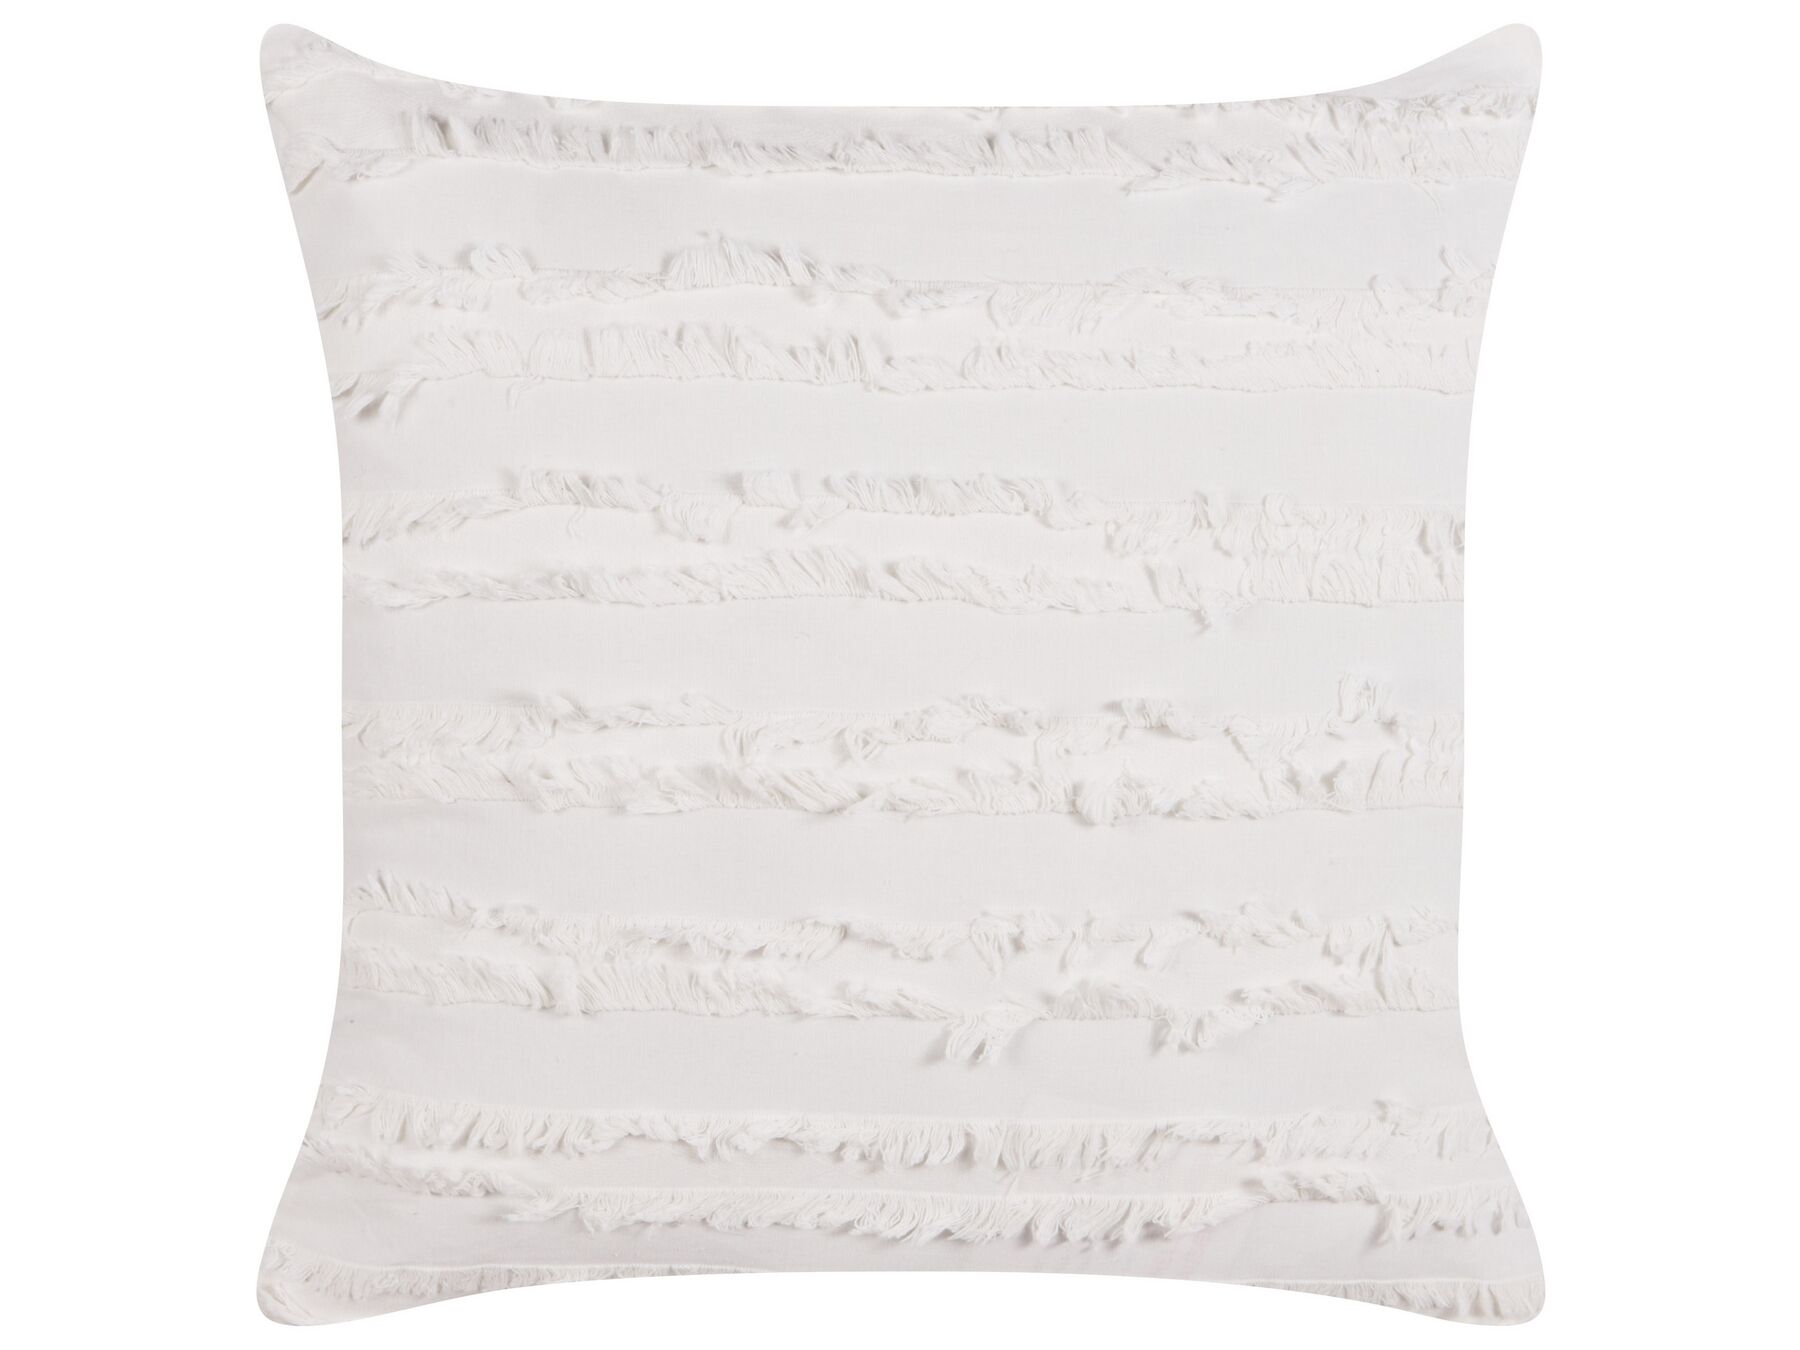 Cuscino cotone bianco 45 x 45 cm MAKNEH_902051